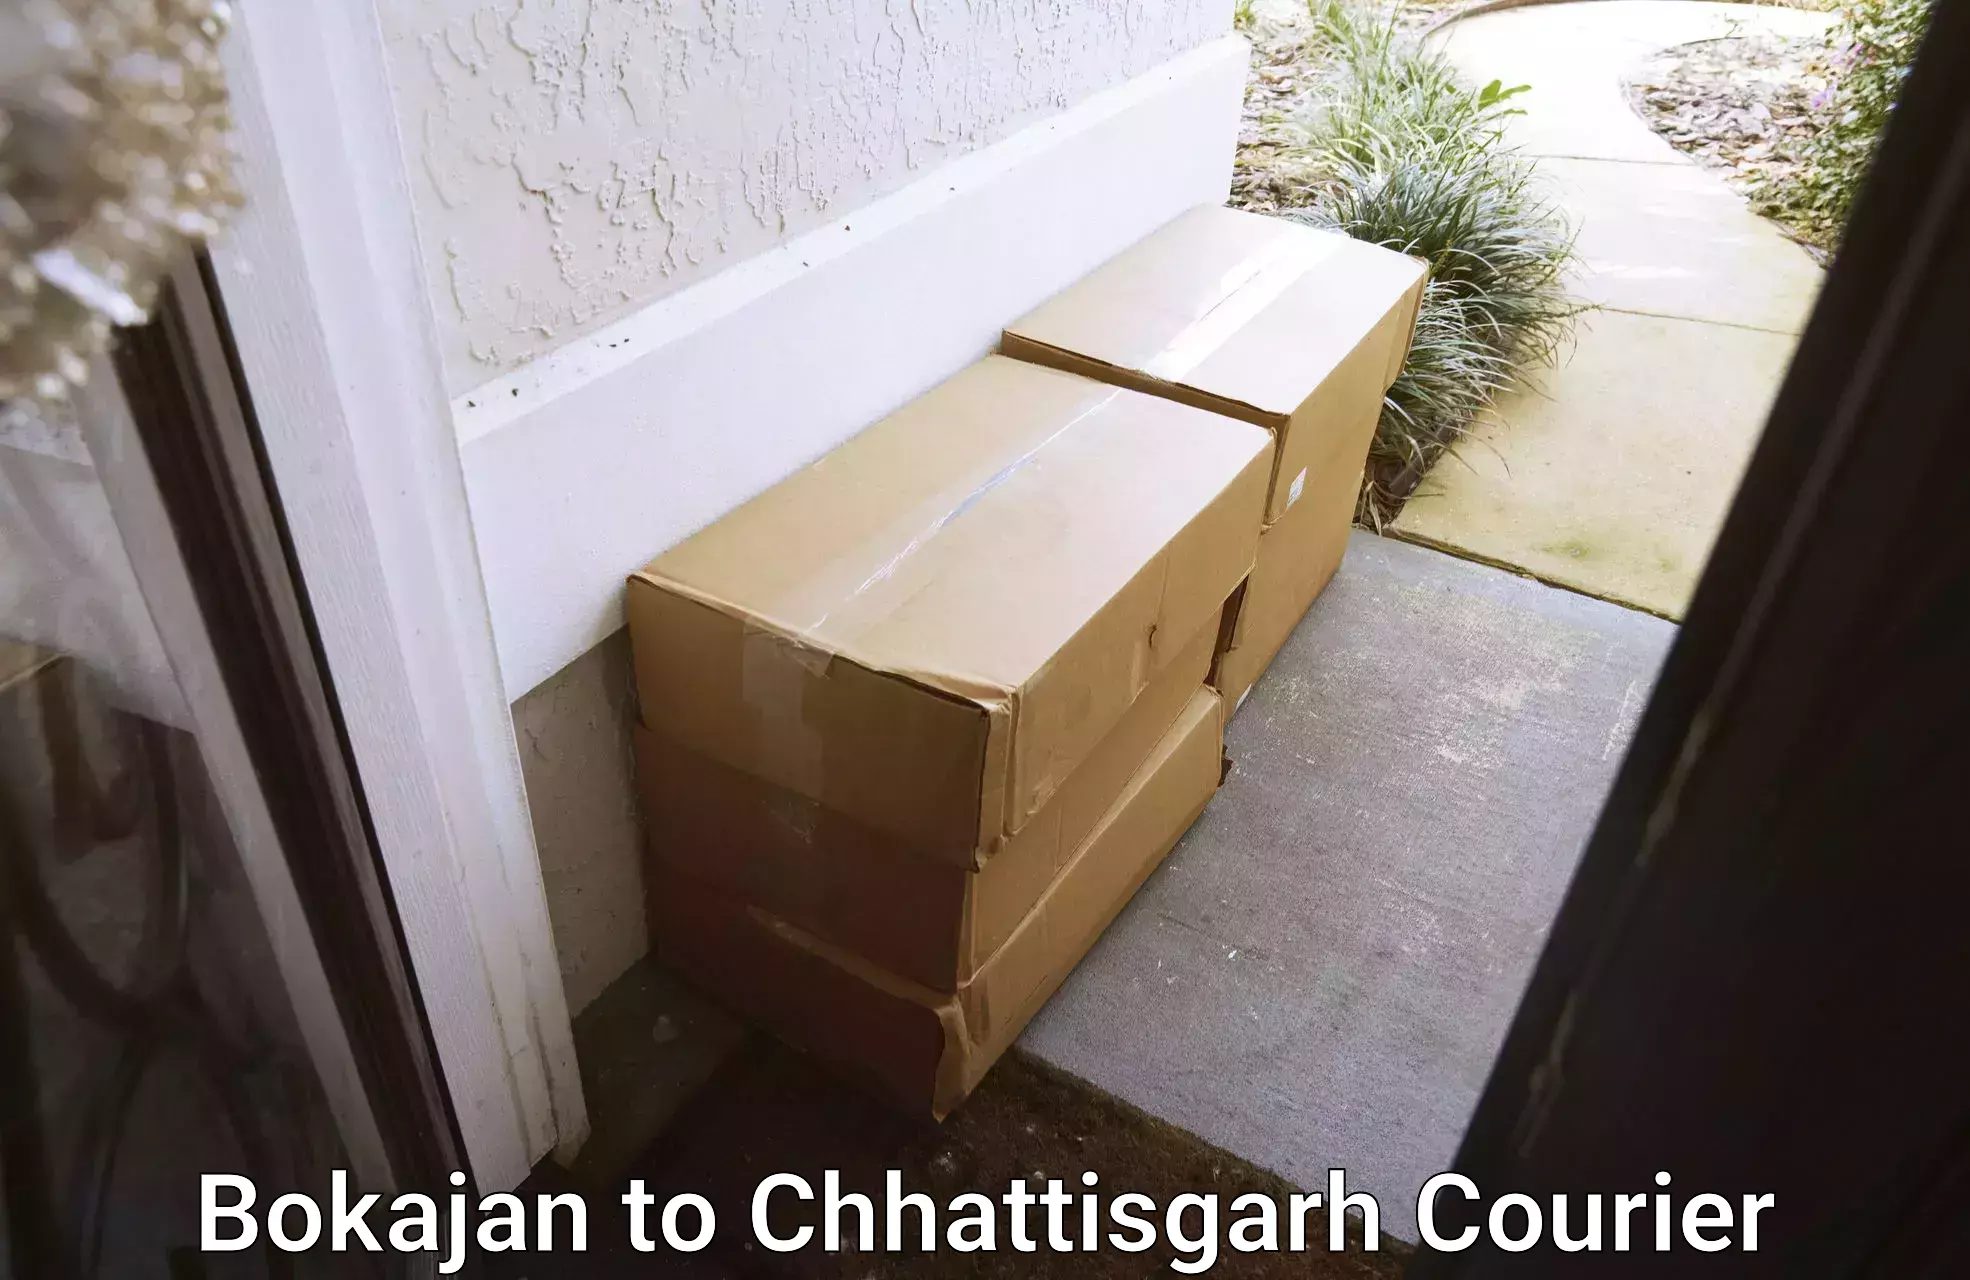 On-call courier service in Bokajan to Chhattisgarh